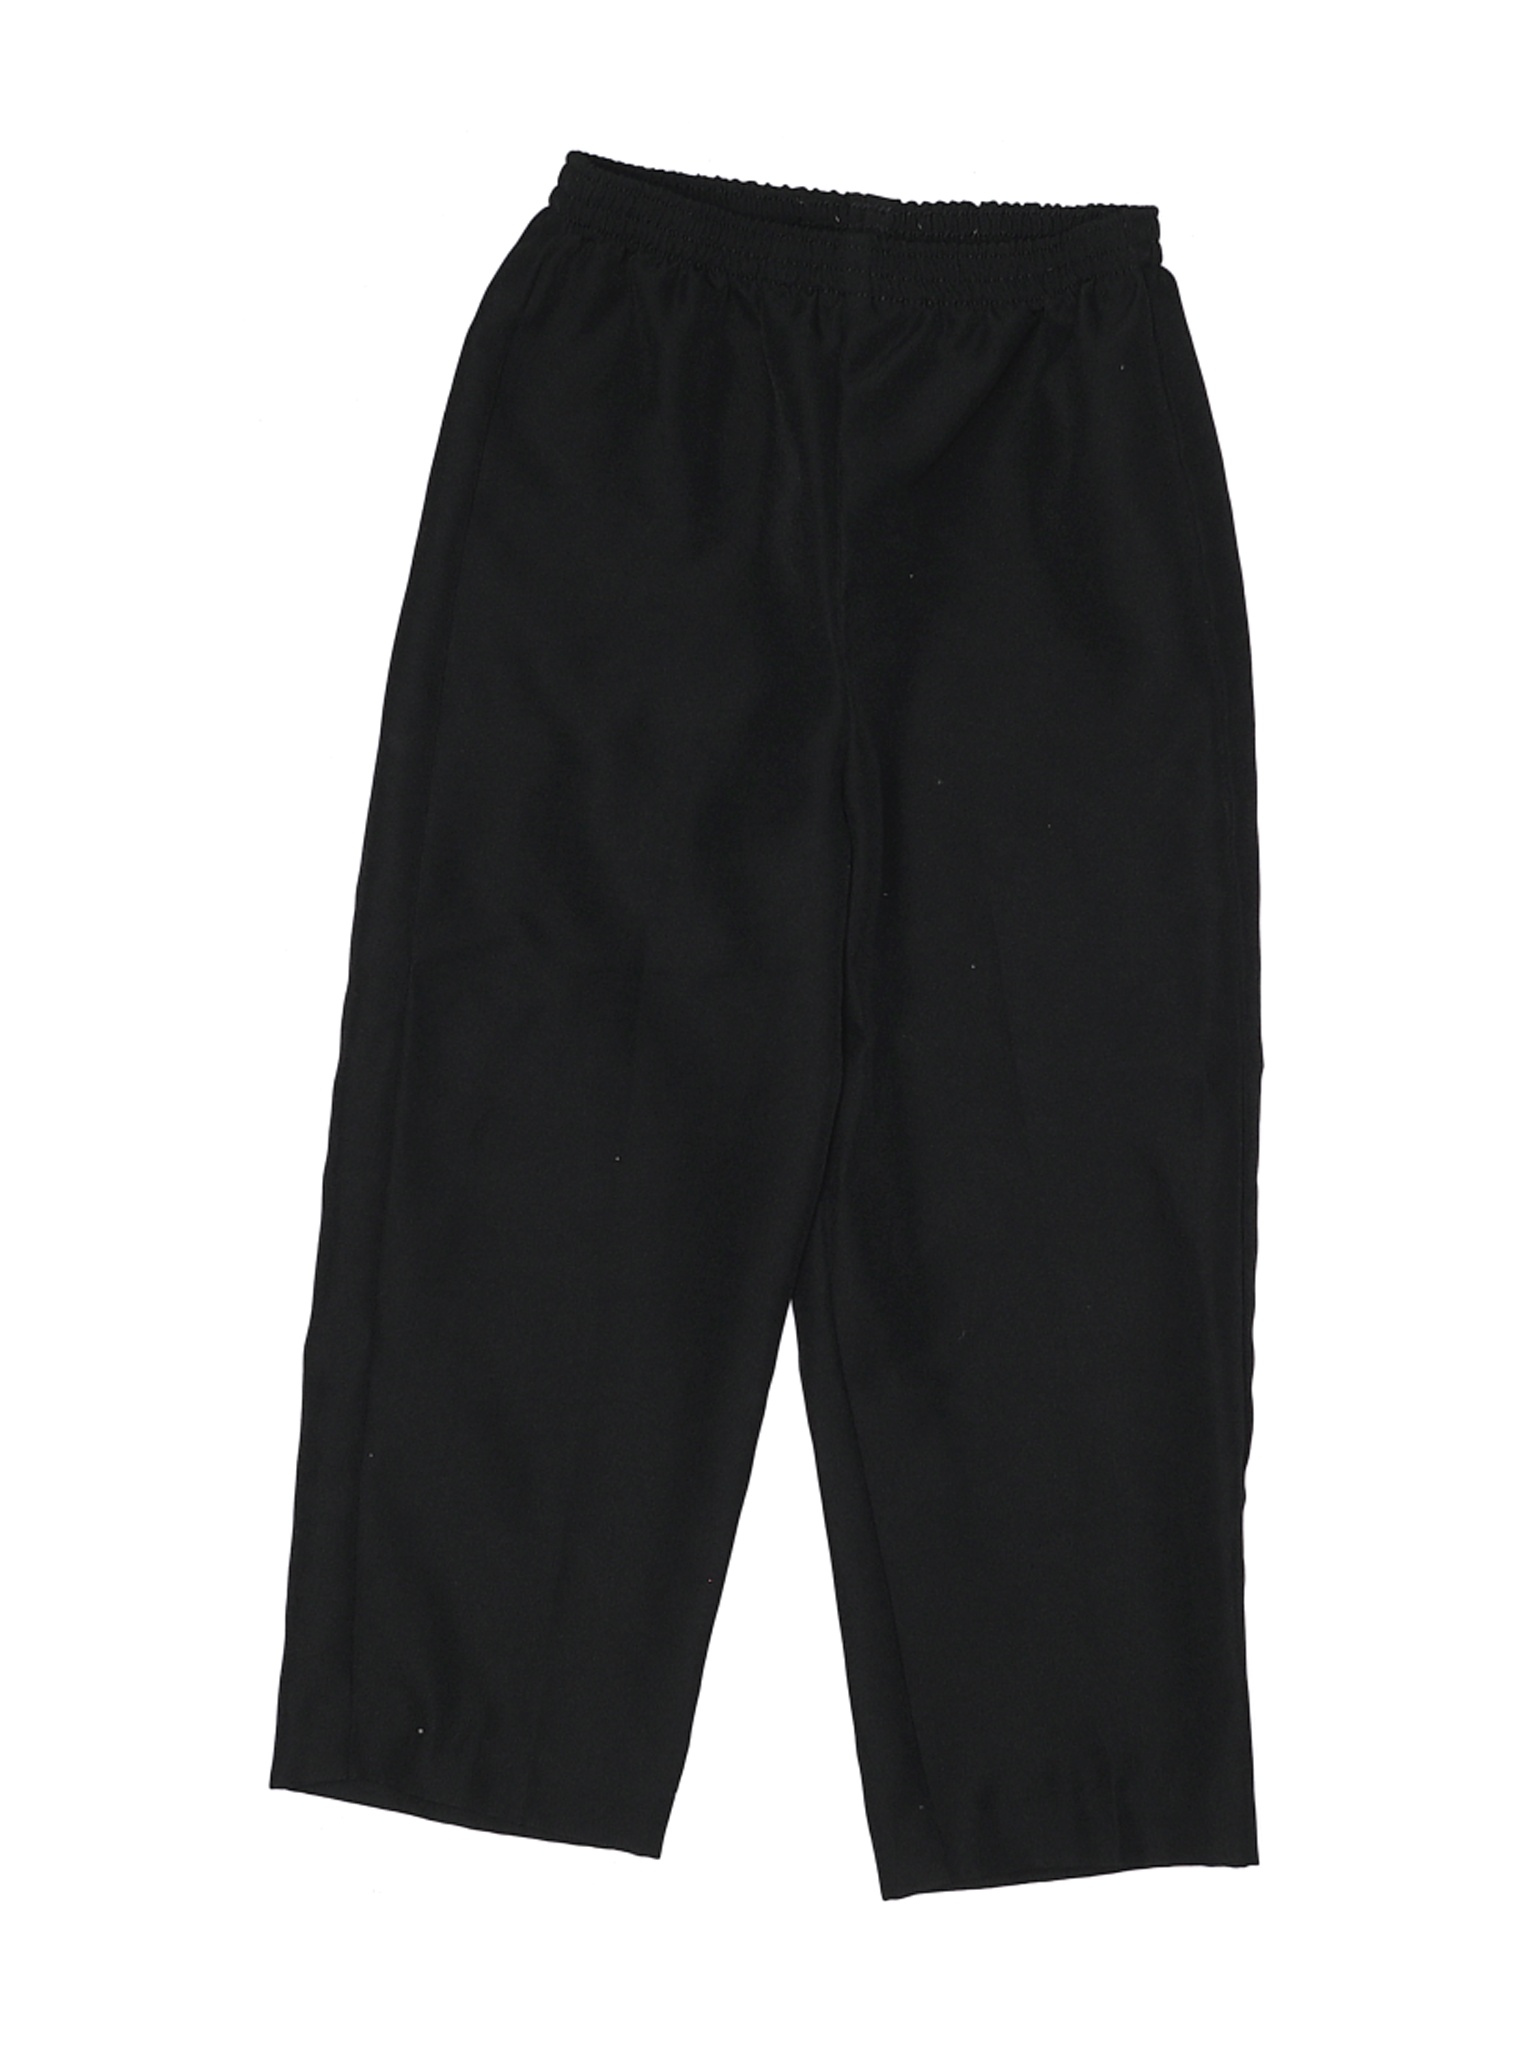 Unbranded Boys Black Casual Pants 4T | eBay